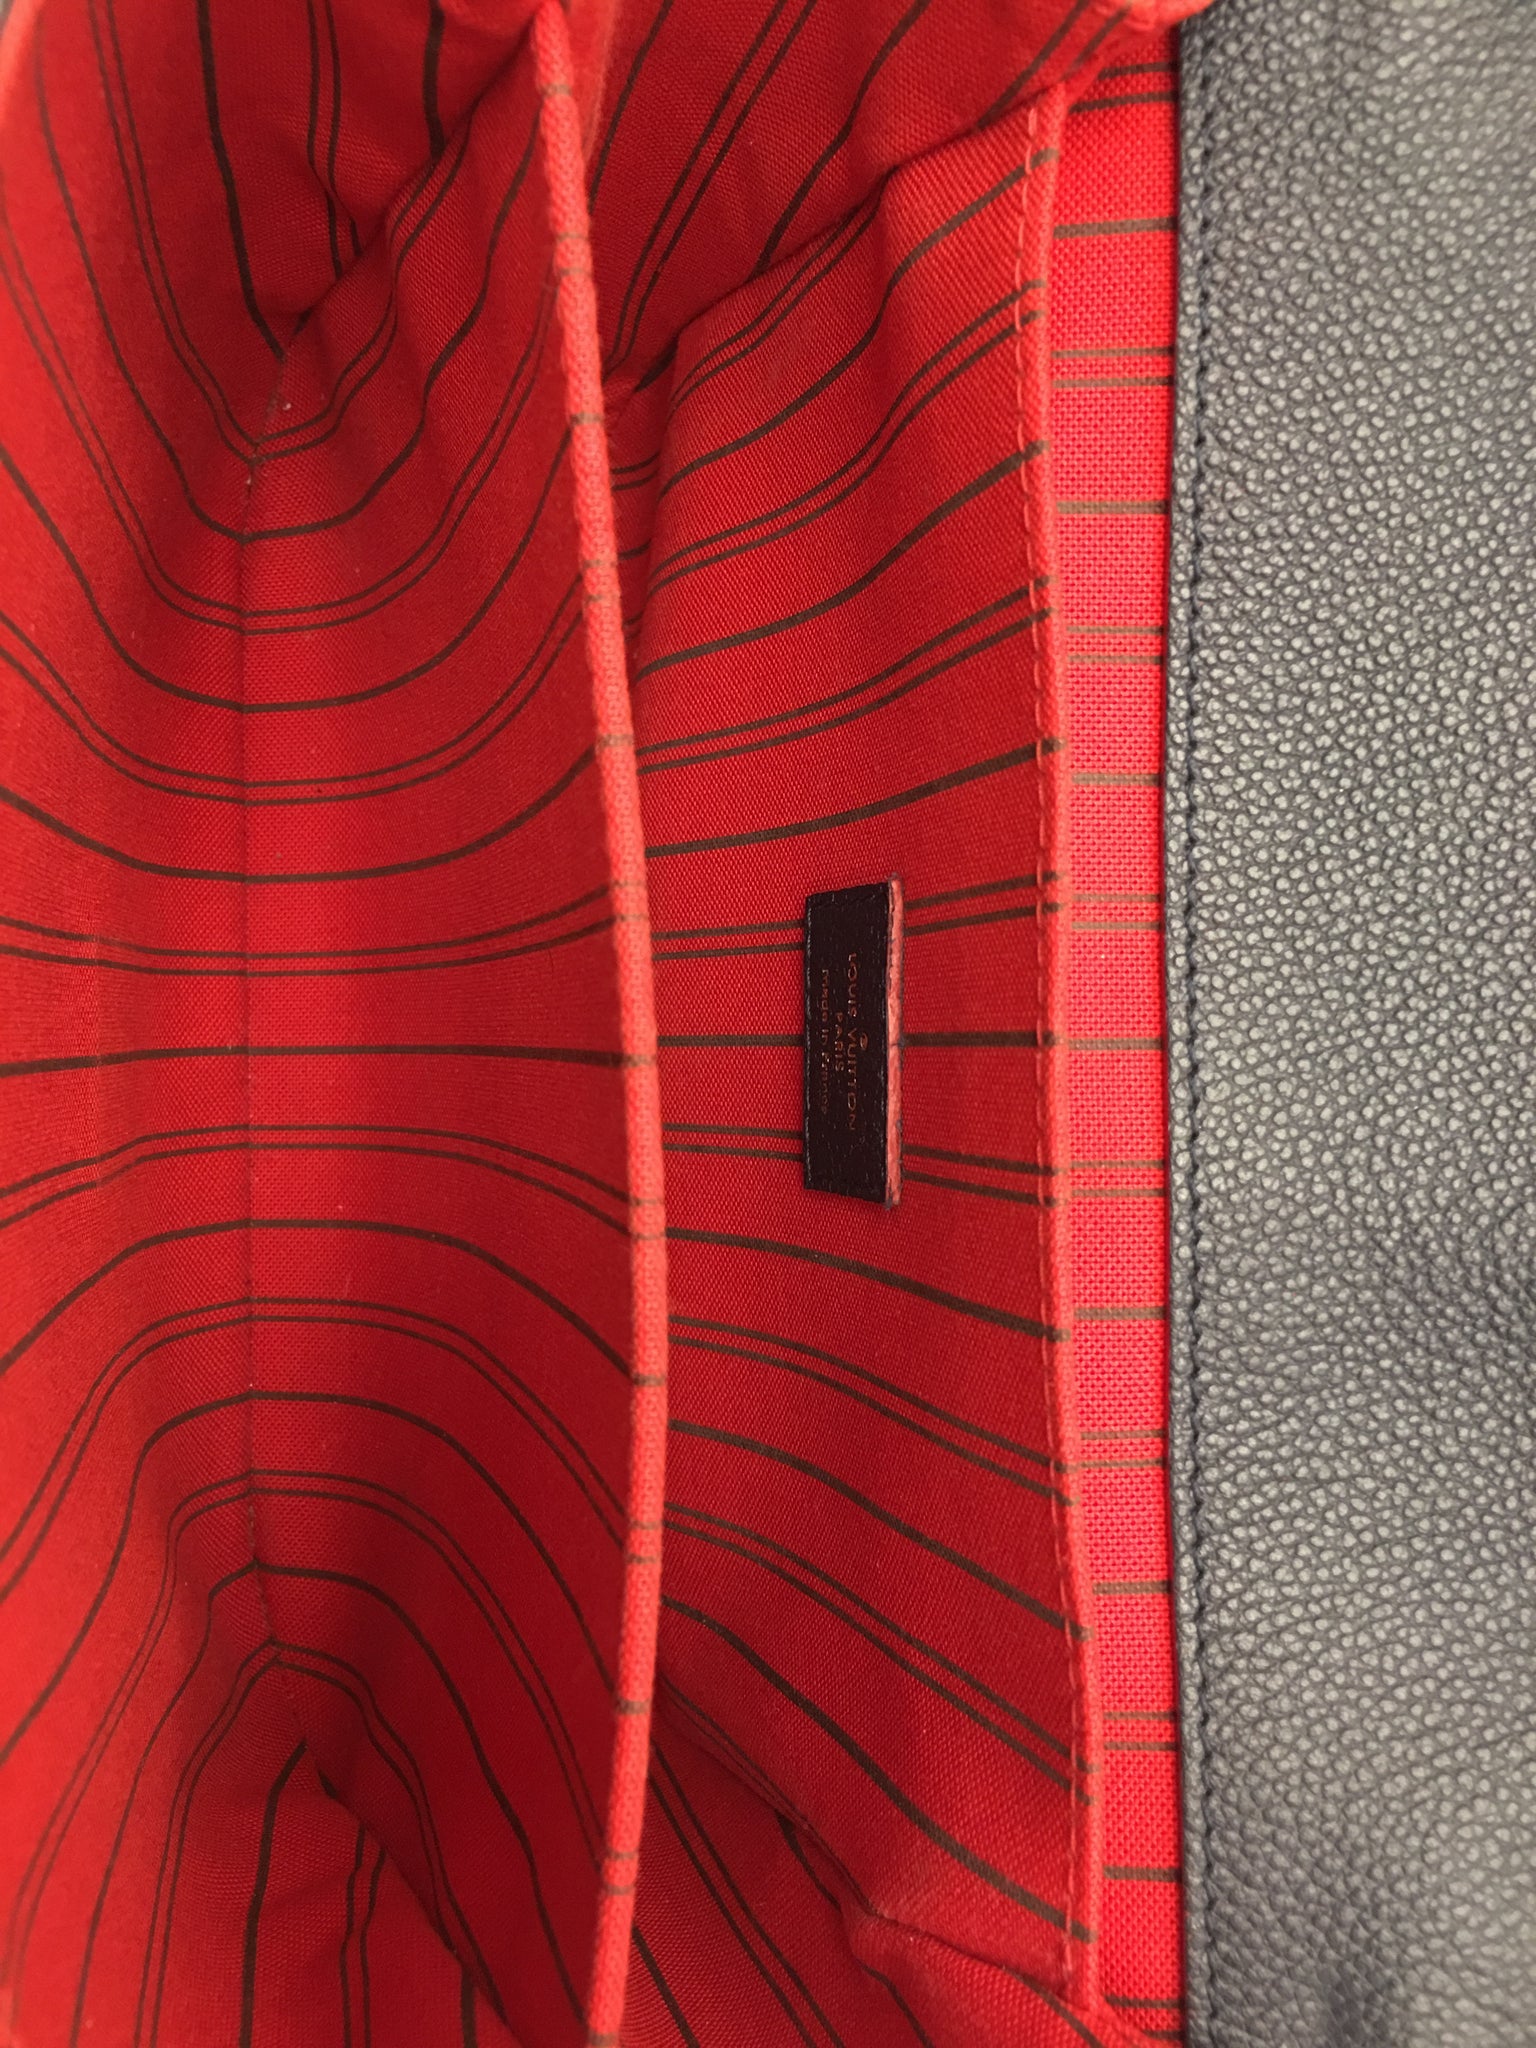 Louis Vuitton Clapton Pochette Metis Monogram Empreinte now on  luxeitfwd.com.au 💙 Featuring 'Marine rouge' navy monogram empreinte  leather …